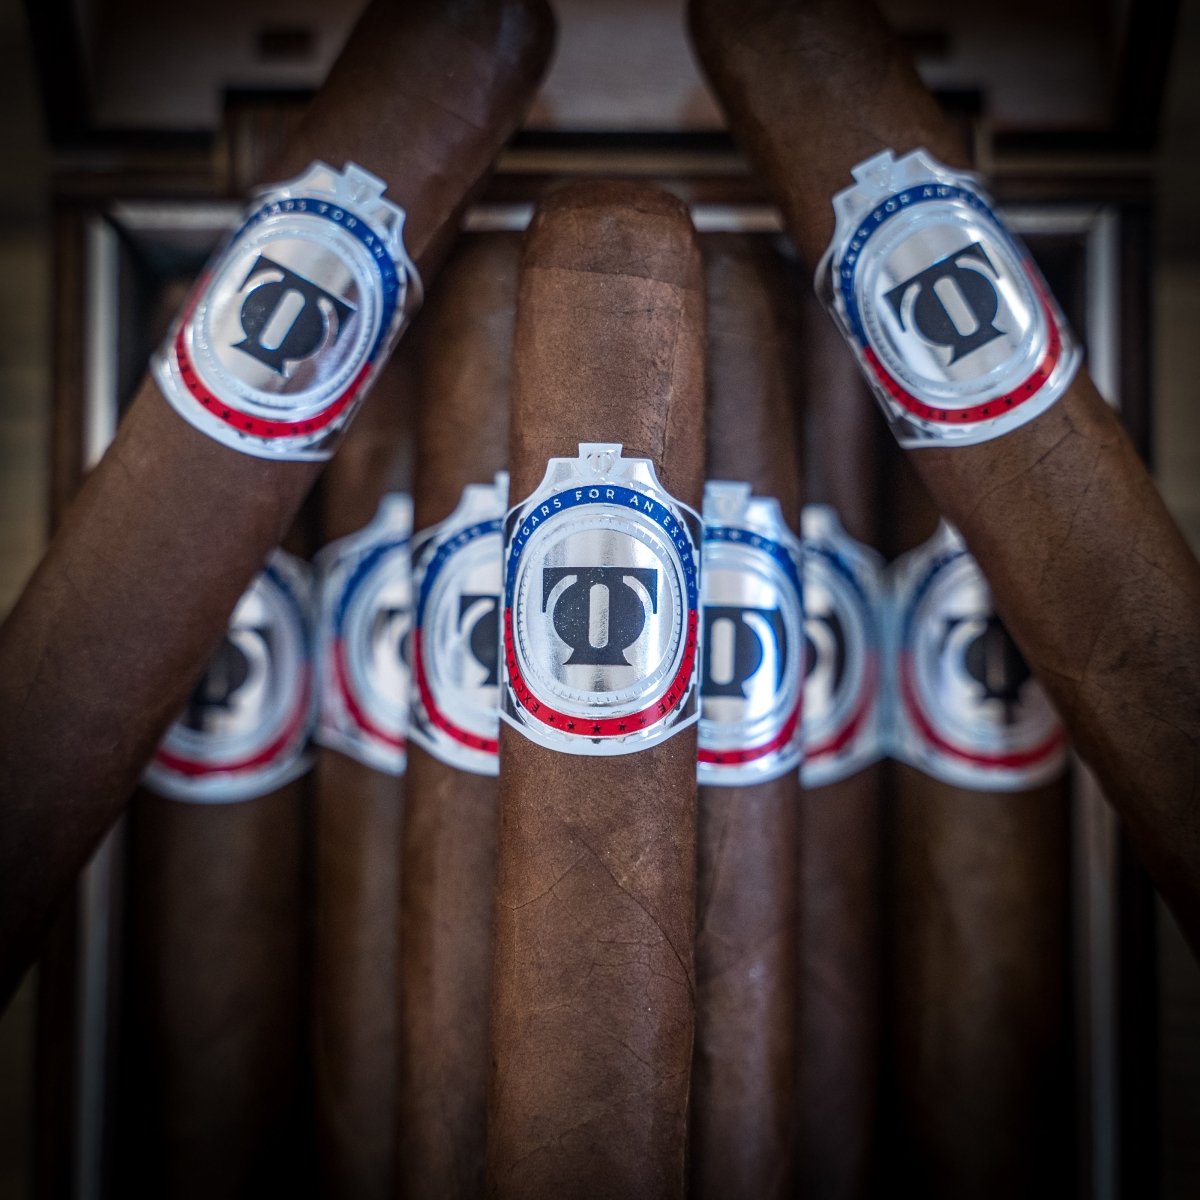 Time Out Sampler - 6 Cigars Total